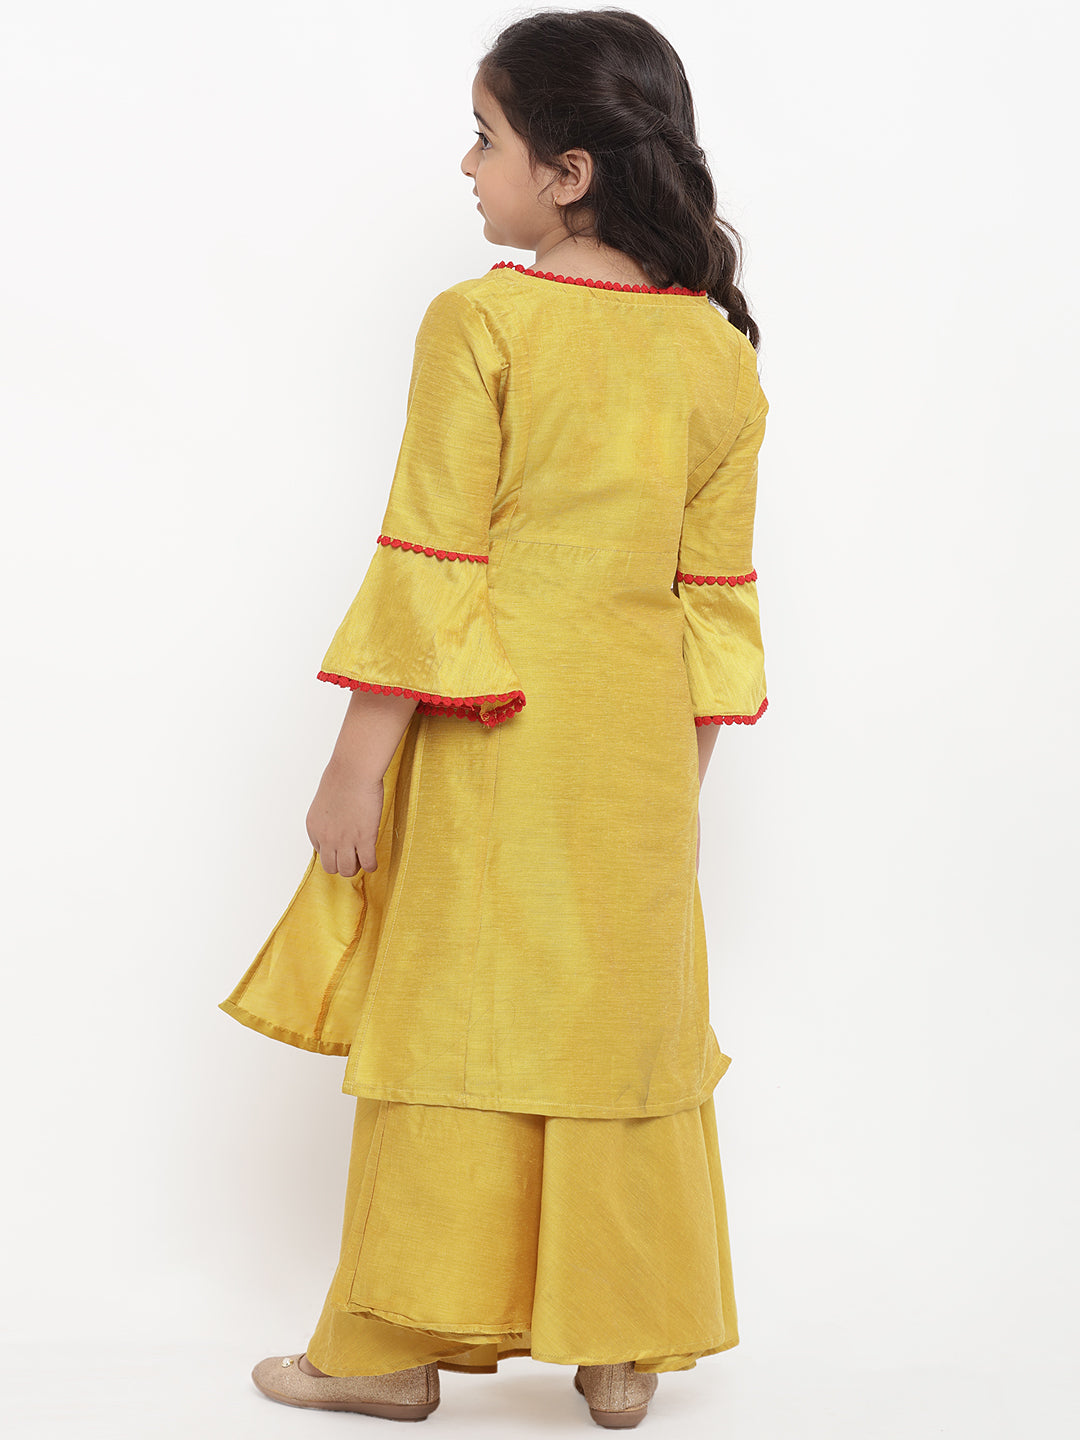 Bitiya by Bhama Girls Yellow Embroidered Kurti with Skirt